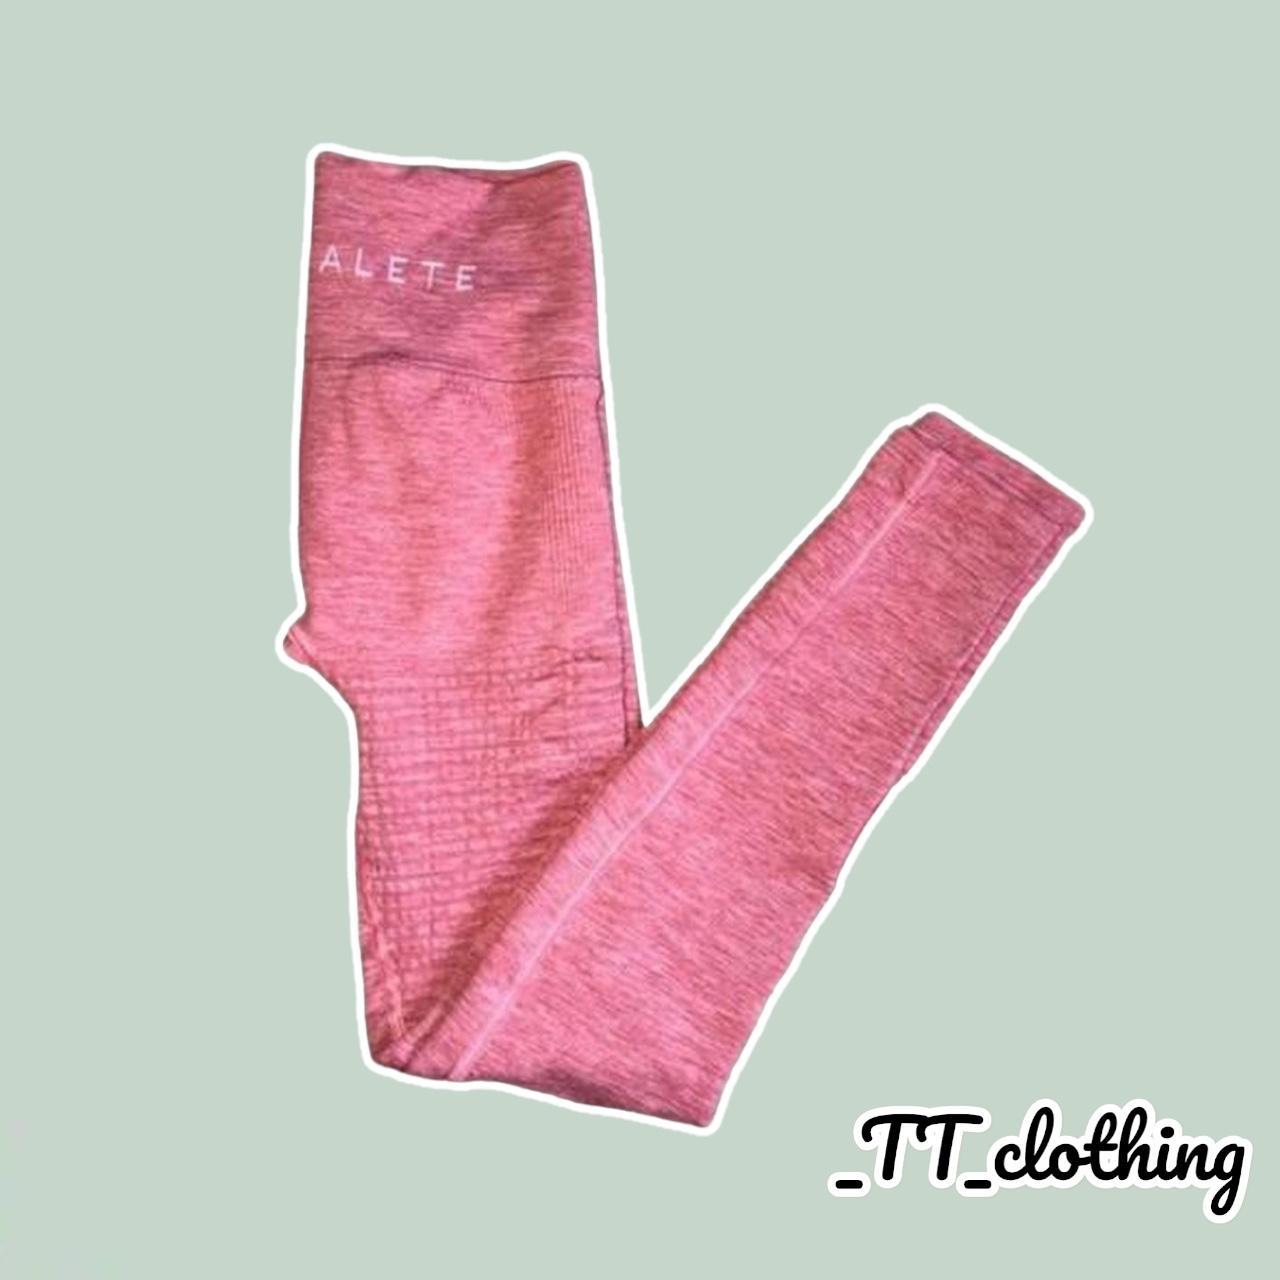 Alphalete halo leggings ▫️Rose pink ▫️Size S (6-8) - Depop